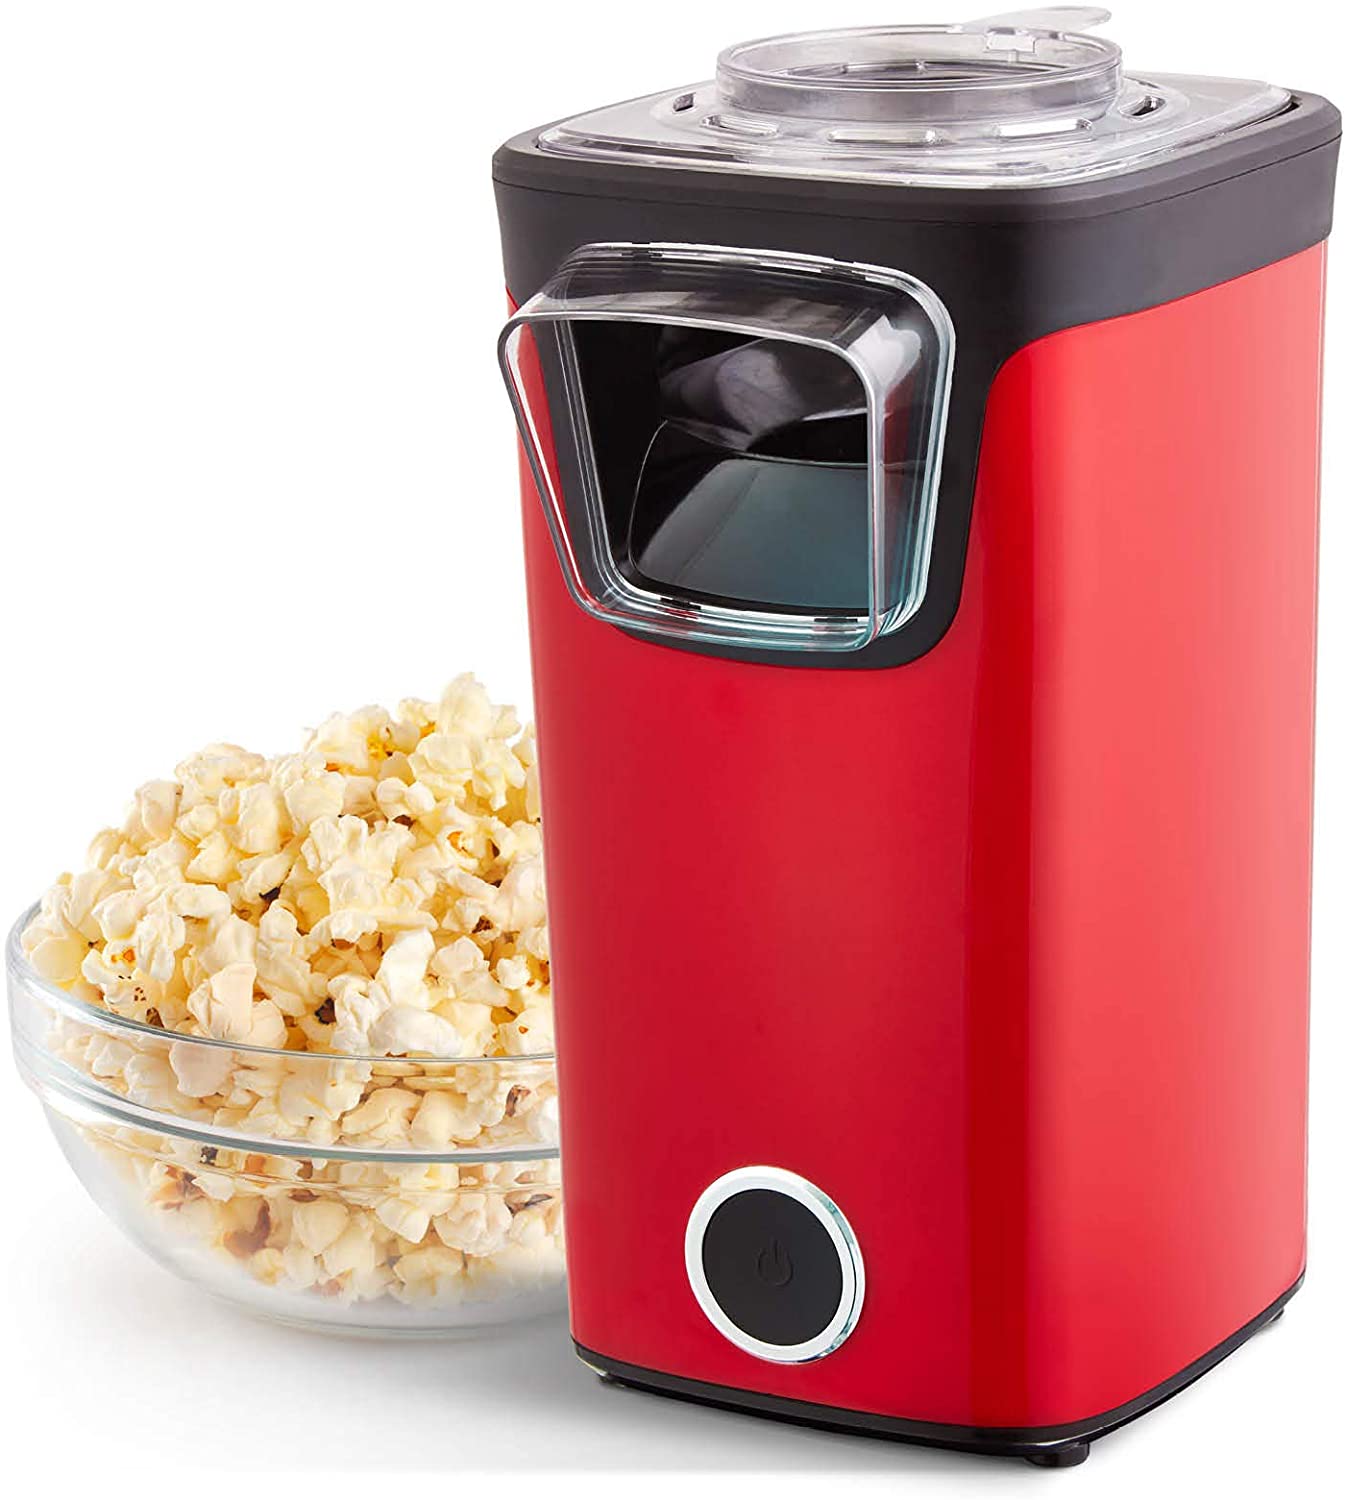 Dash Turbo Pop Popcorn Maker - Red DAPP155GBRD06 UPC  - DAPP155GBRD06